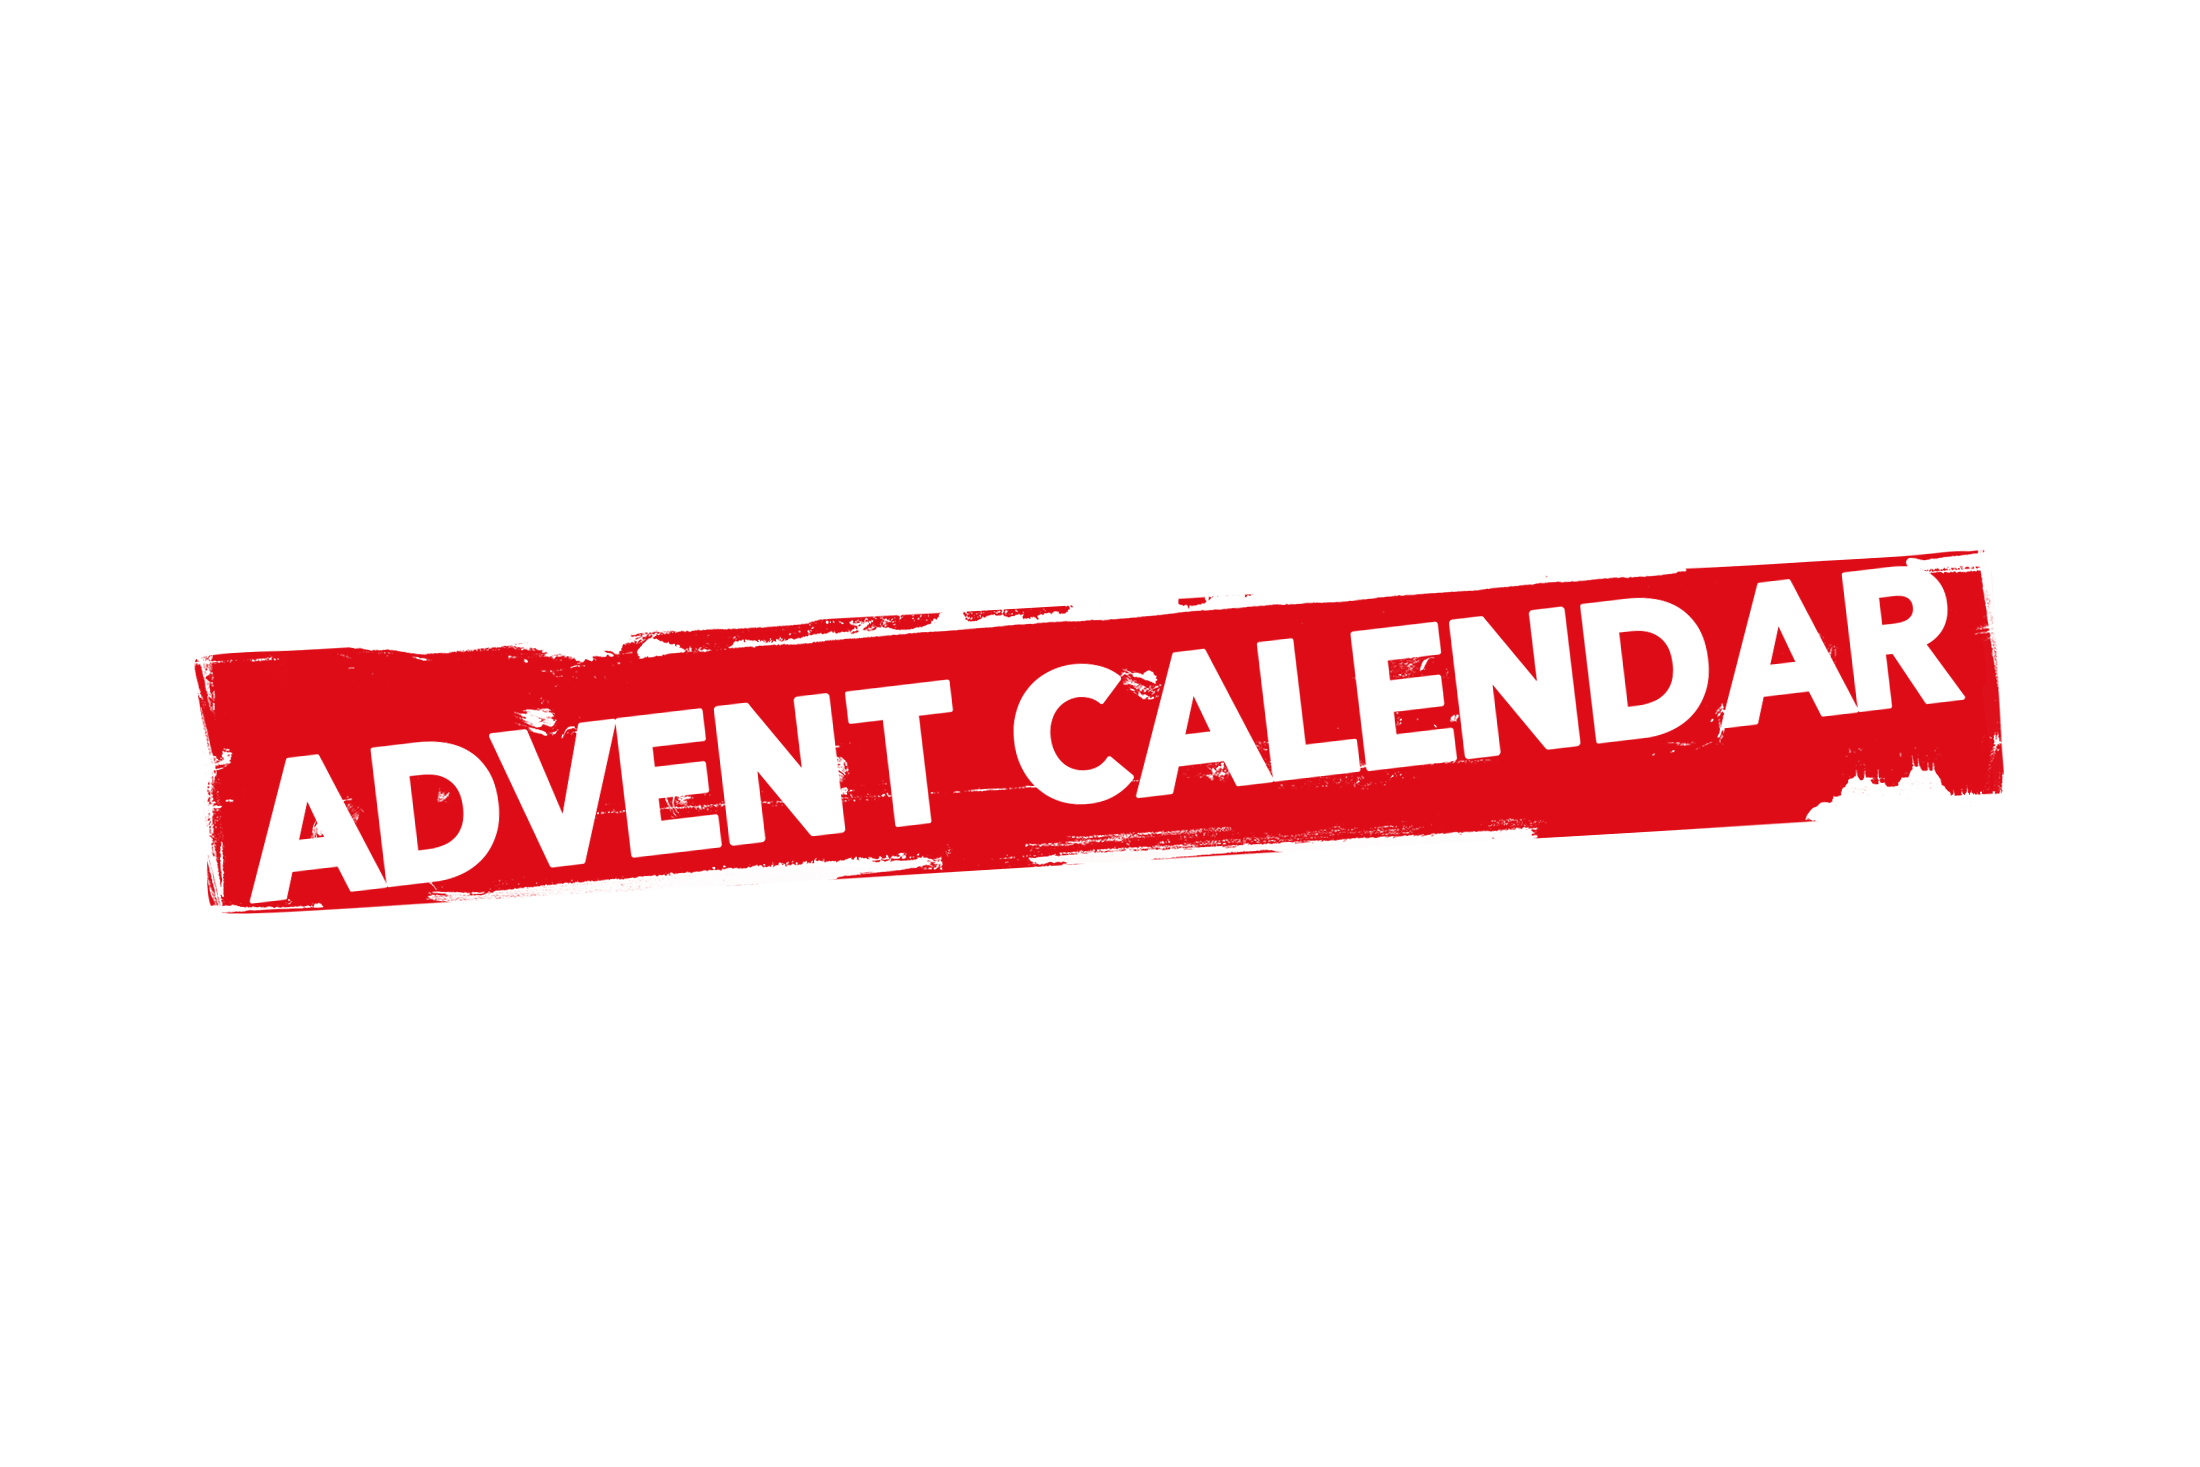 Grunge advent calendar label PSD